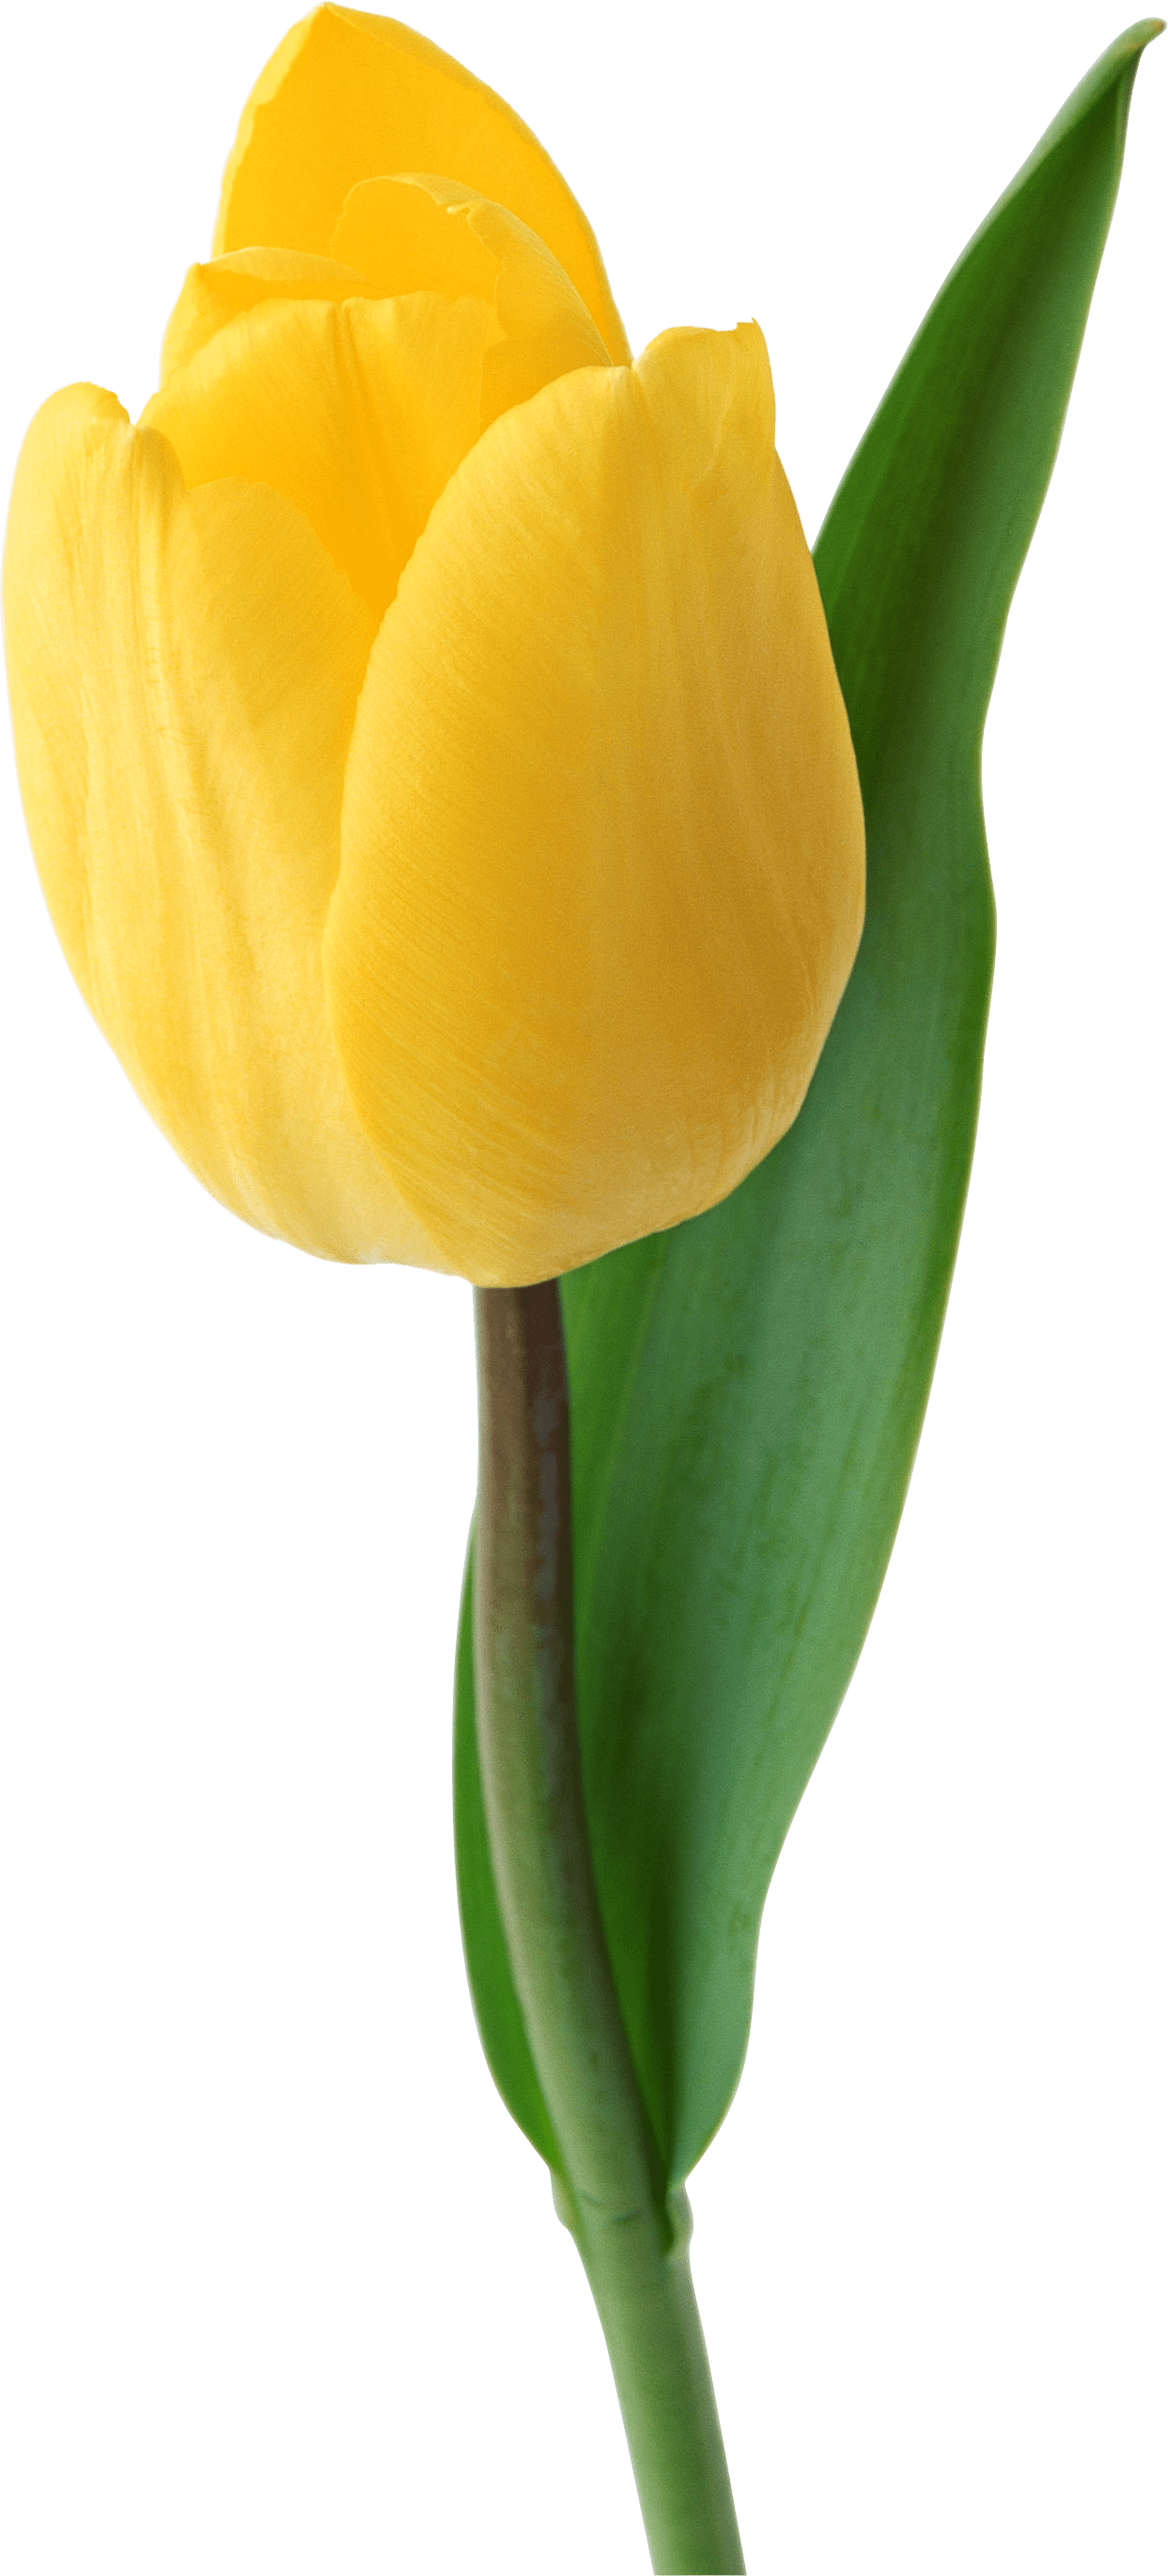 Vibrant Yellow Tulip Single Bloom